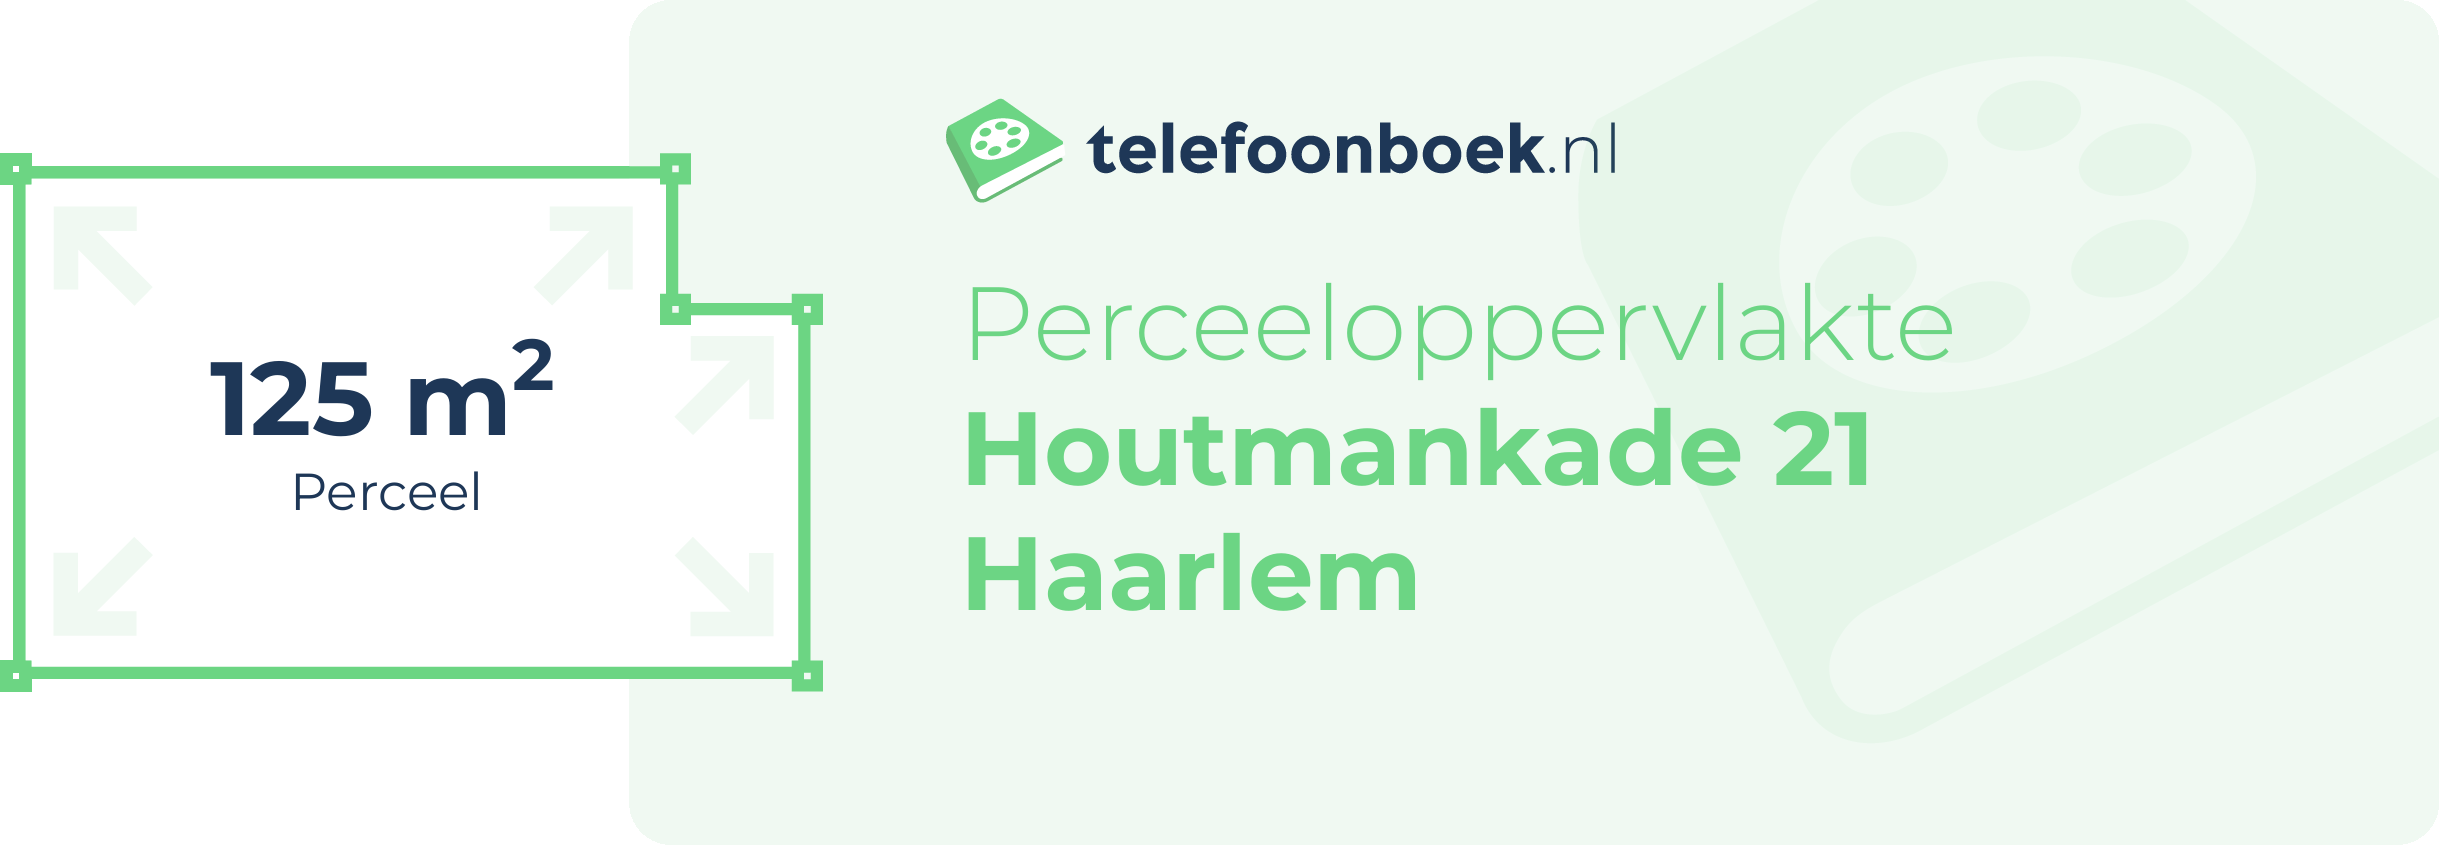 Perceeloppervlakte Houtmankade 21 Haarlem